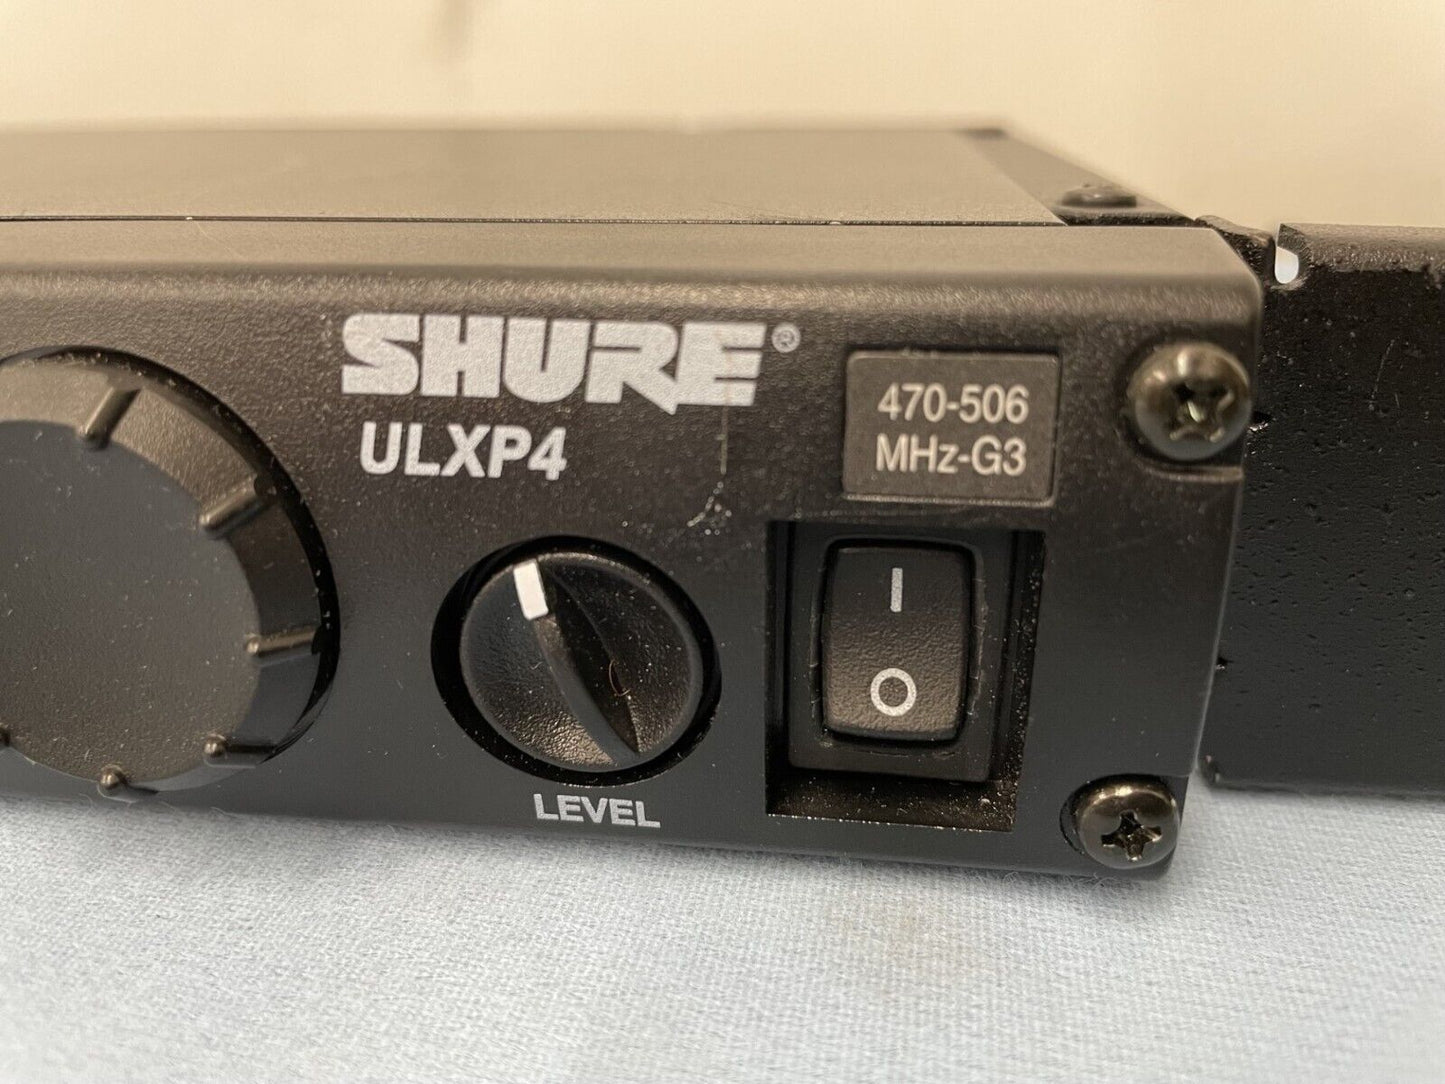 Shure ULX Wireless Pro Microphone System w/ Performance Headset 470-506 MHz G3